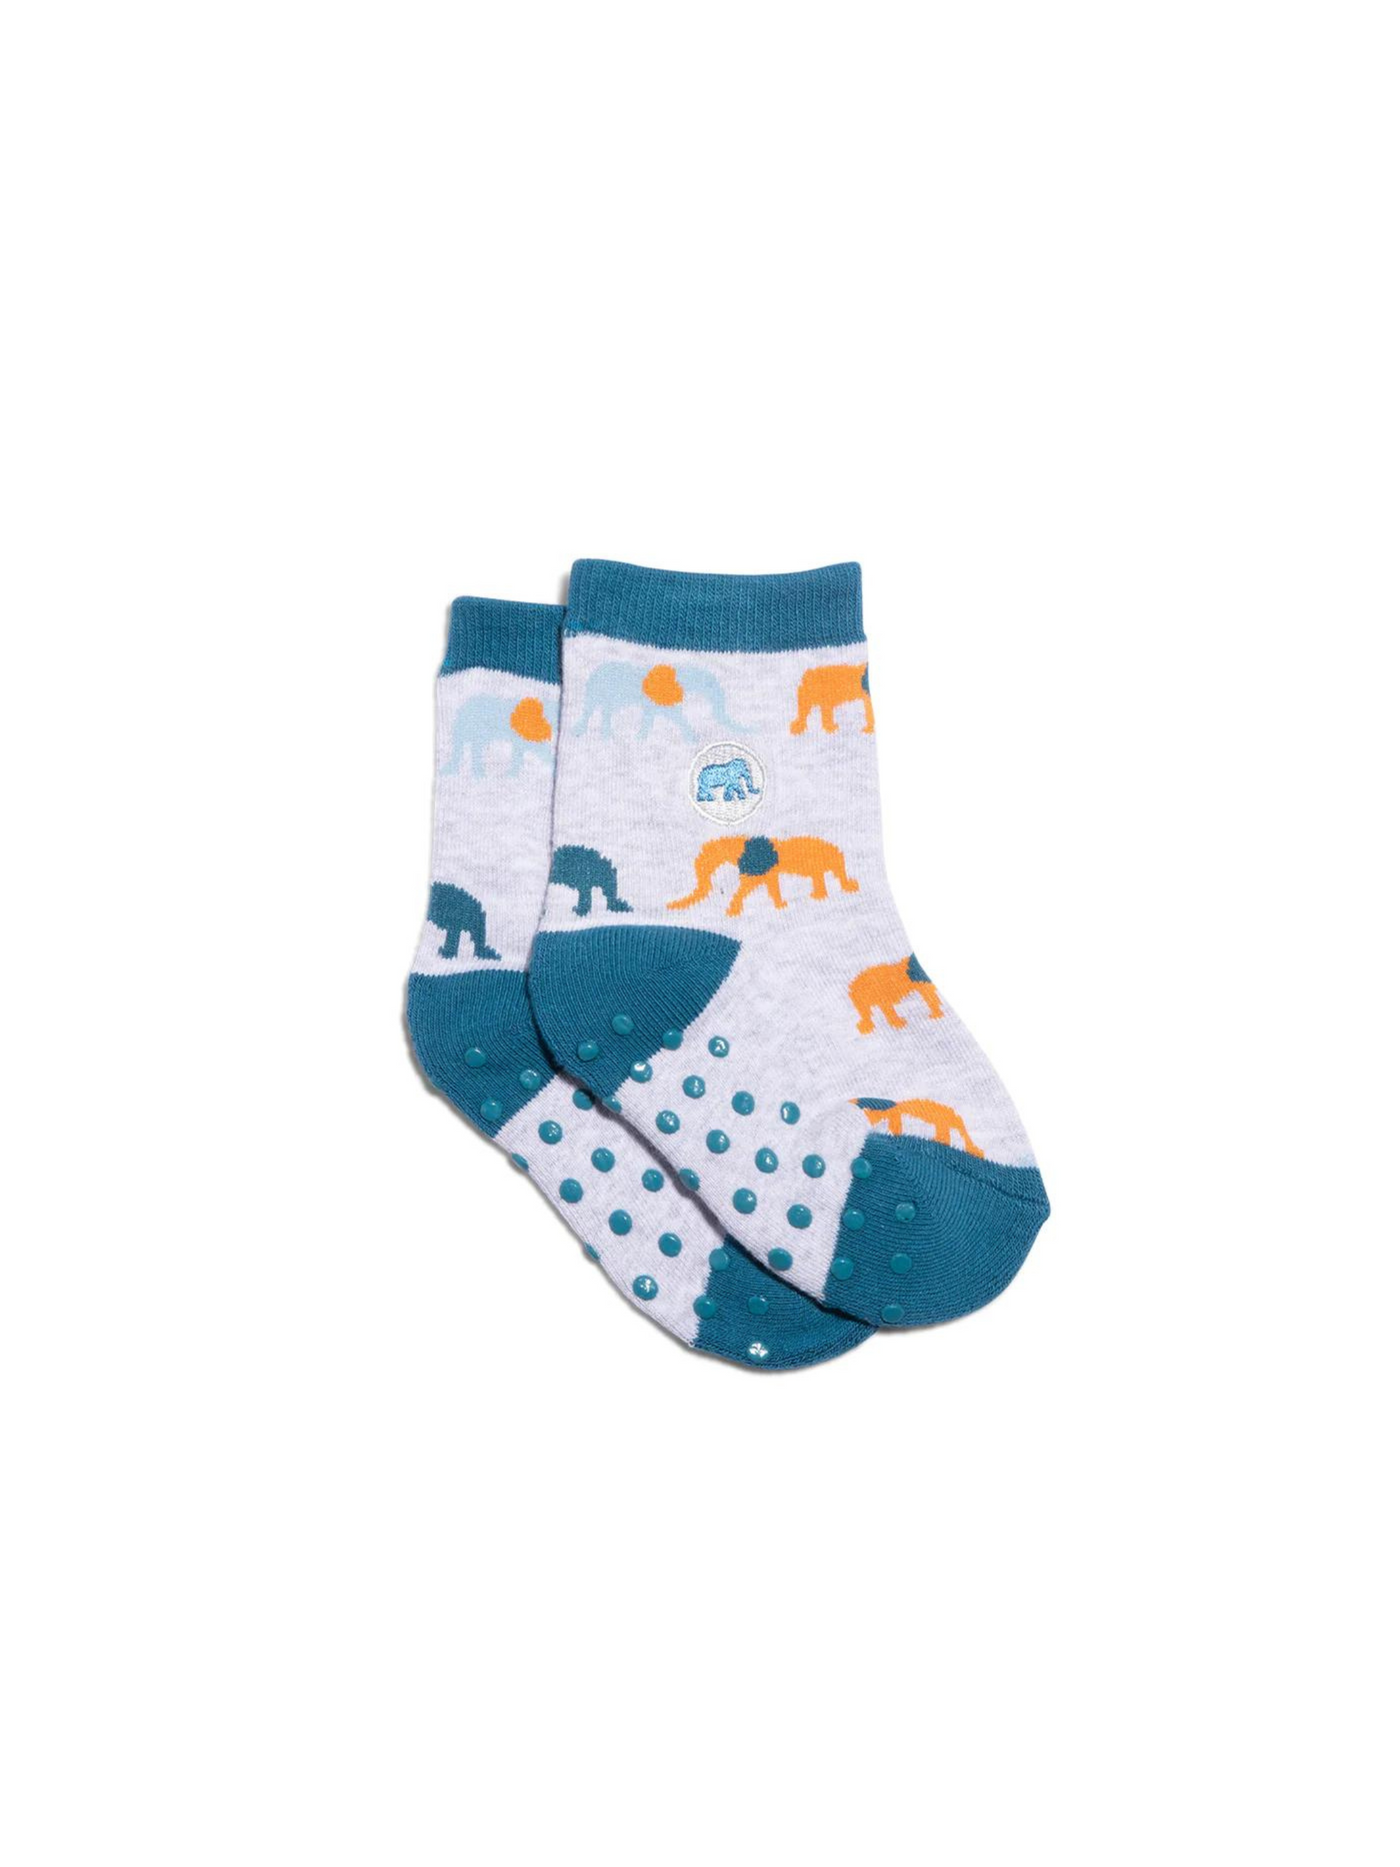 Kids Socks That Protect Elephants